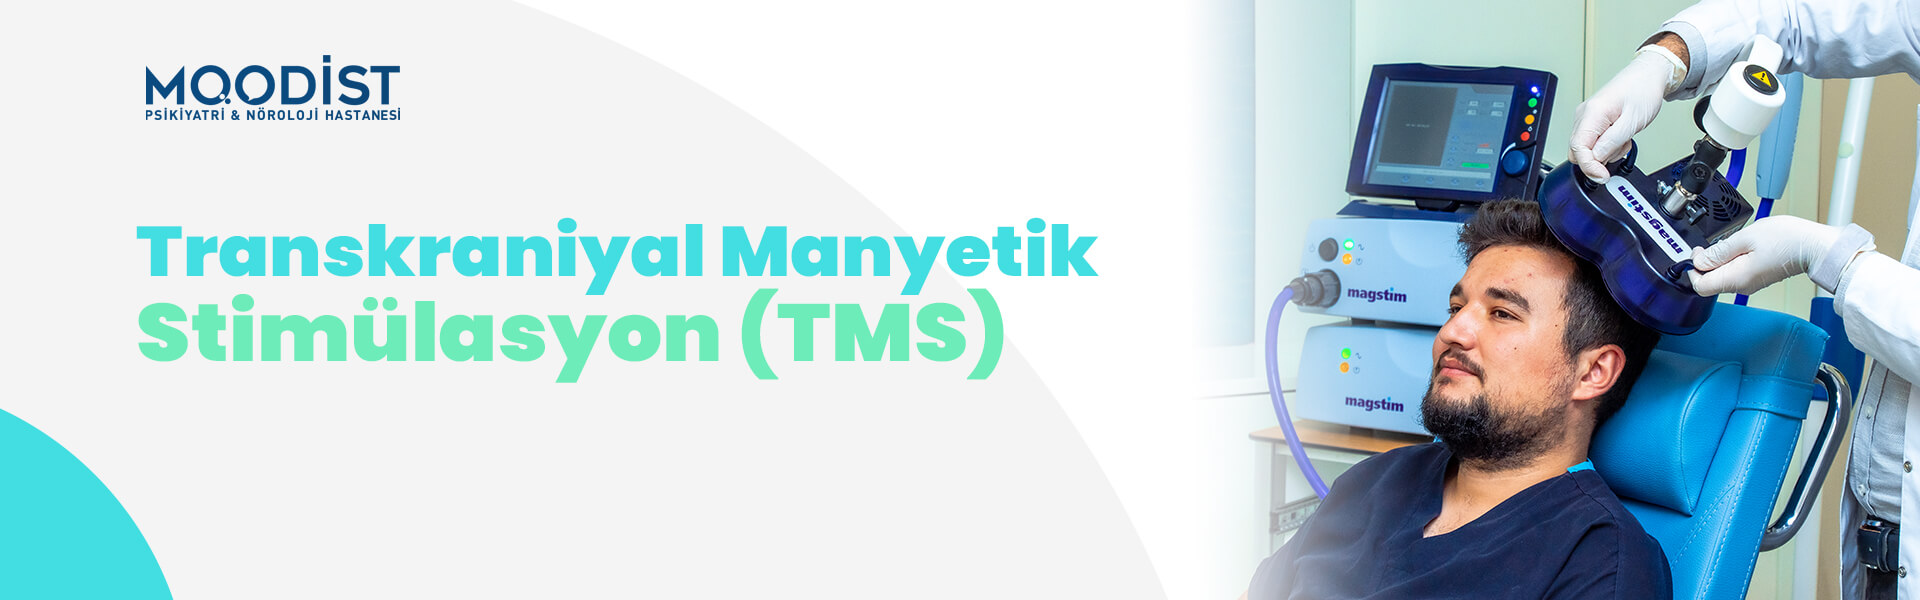 Transkraniyal Manyetik Stimülasyon (TMS)